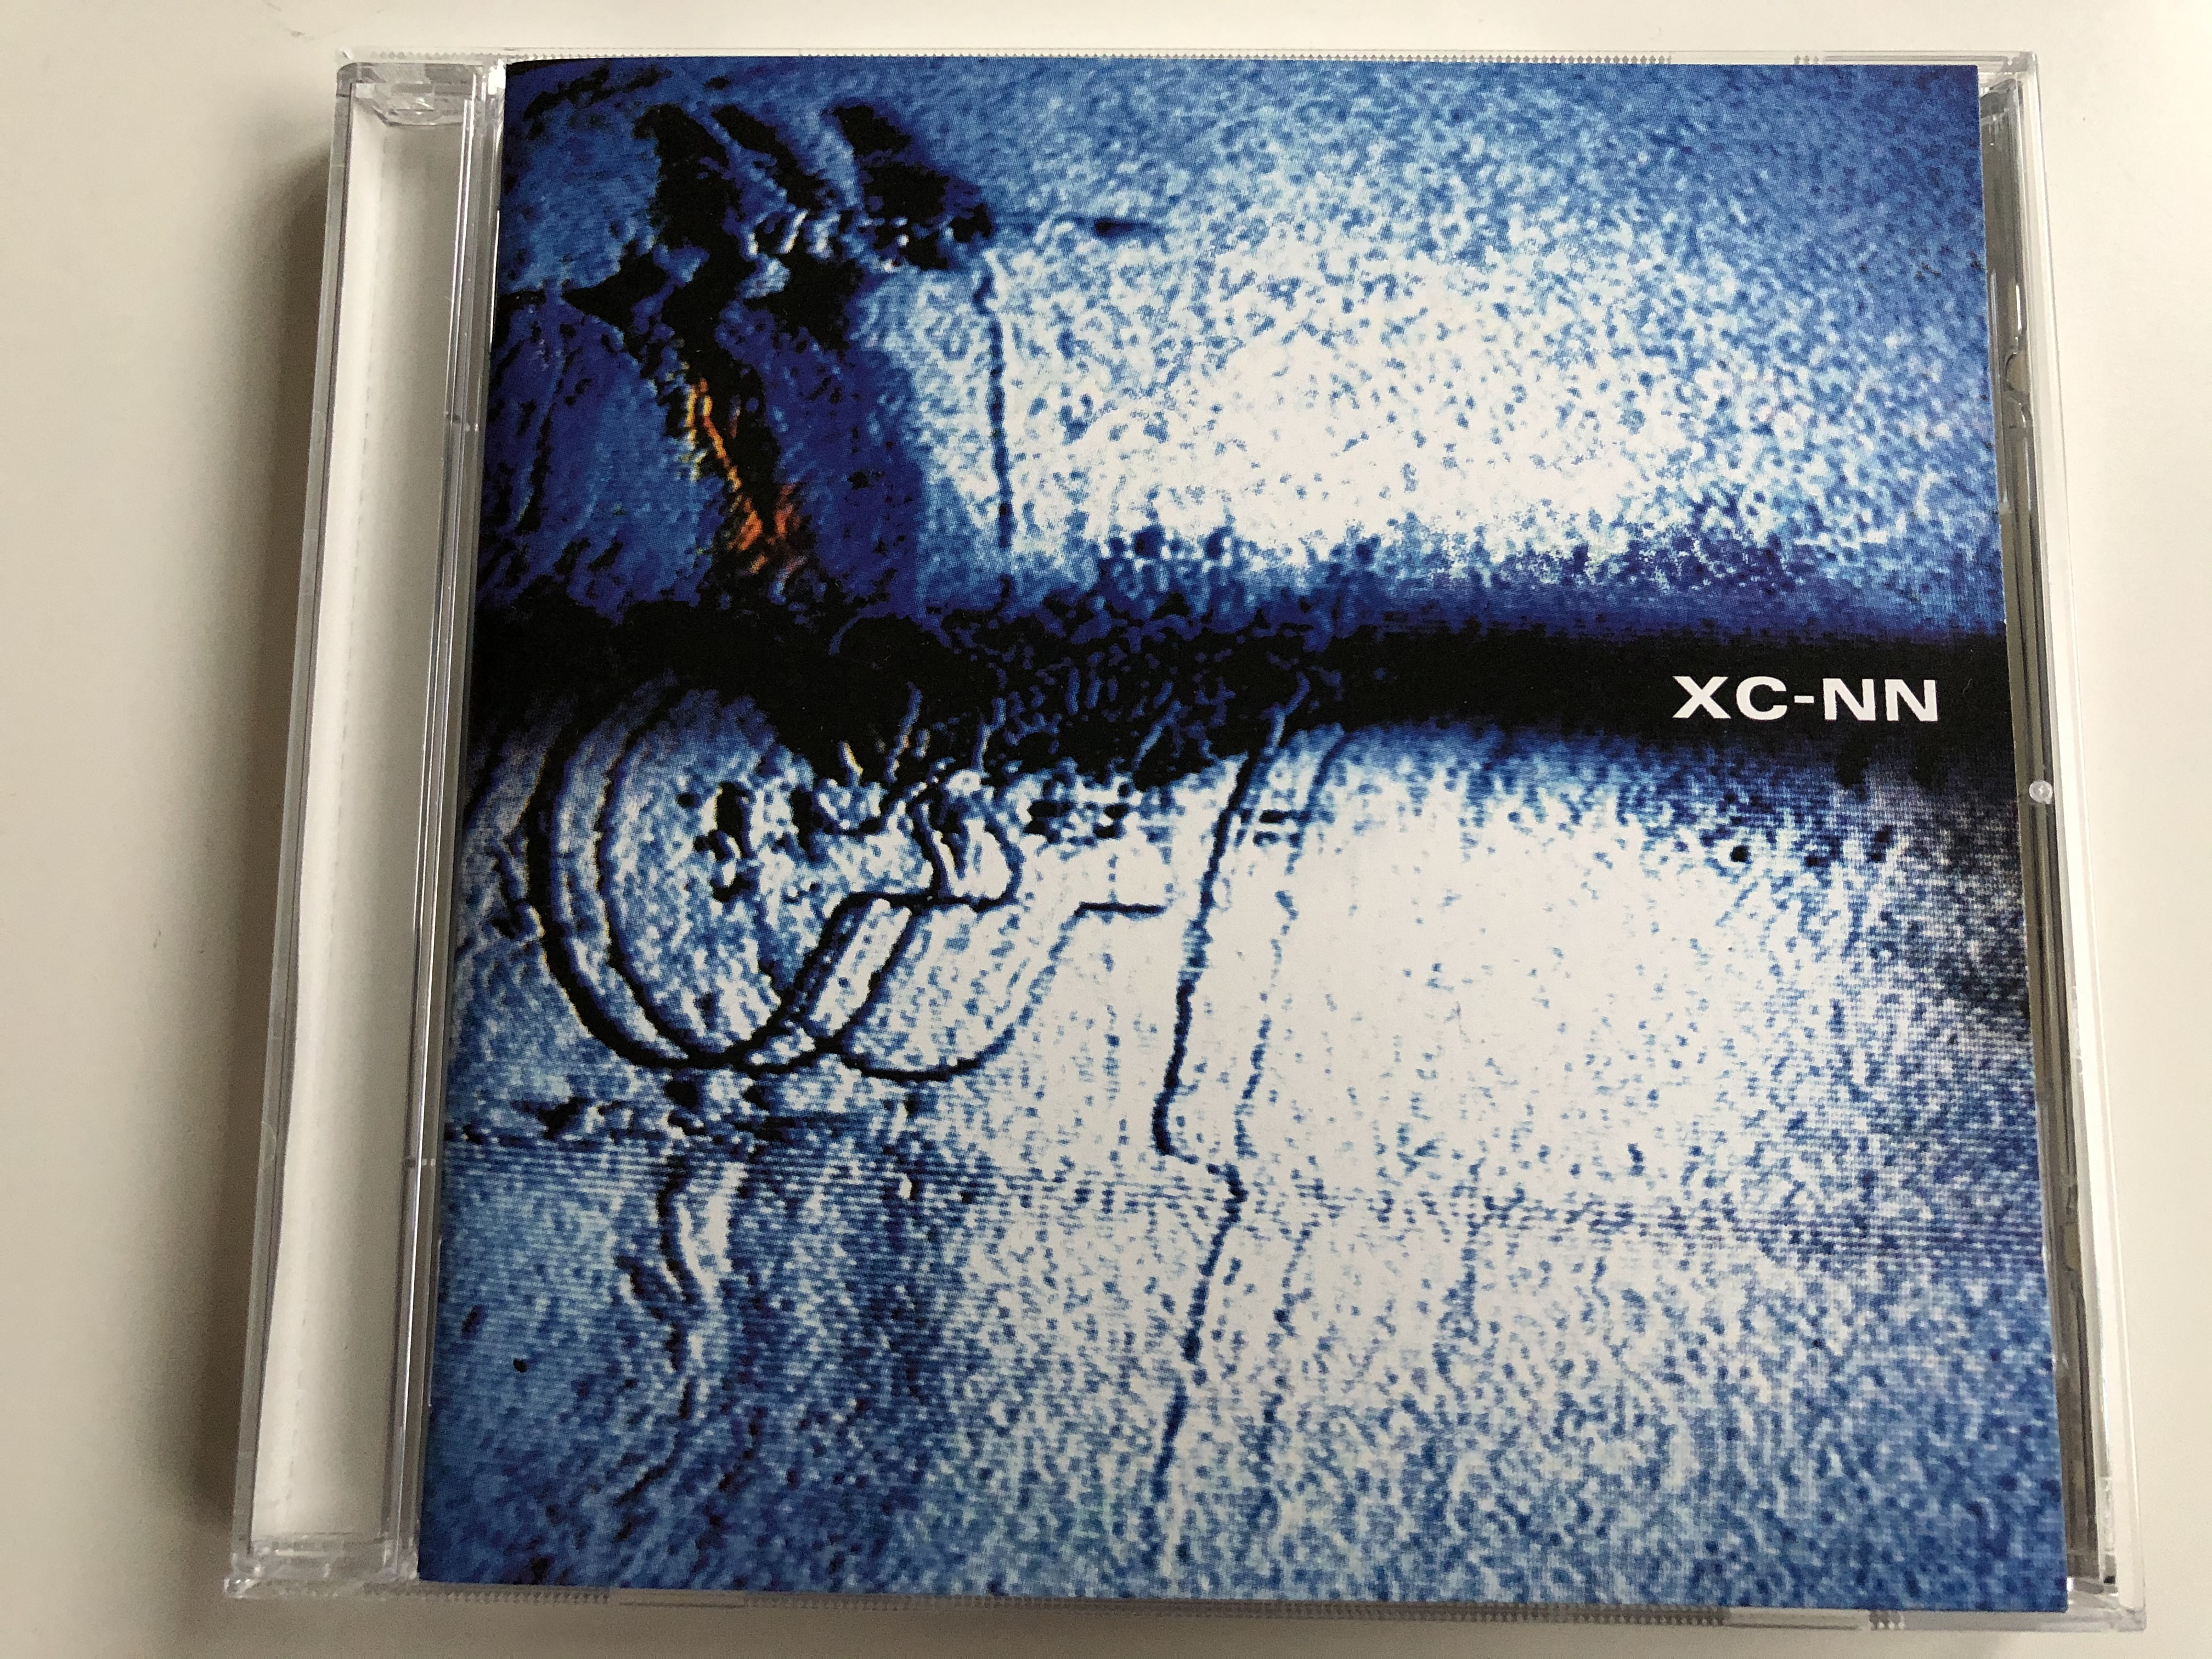 xc-nn-transglobal-audio-cd-1994-476643-2-1-.jpg